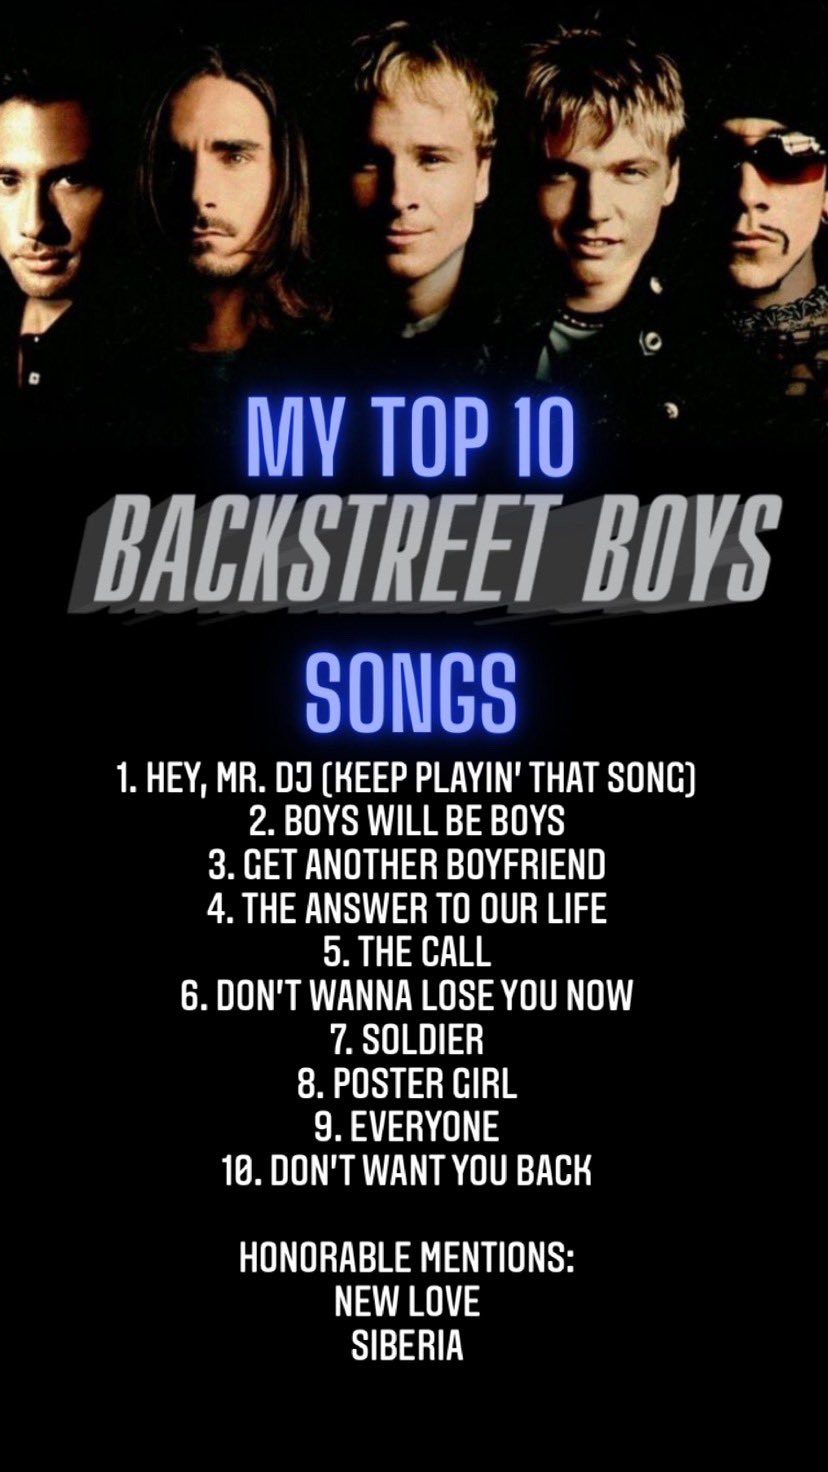 Top 10 Backstreet Boys Songs